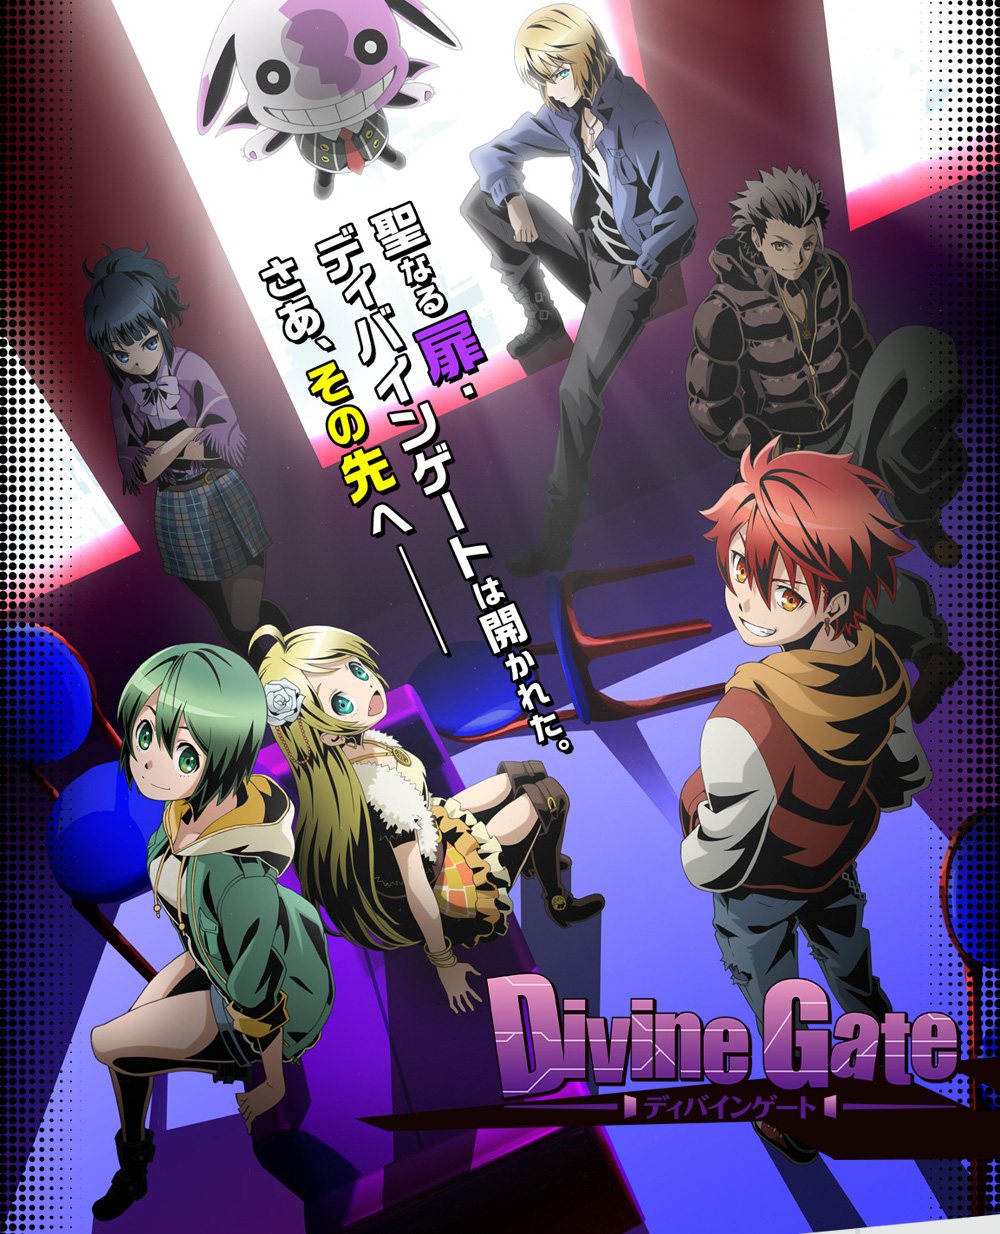 Mobile Game Divine Gate Gets Tv Anime Adaptation For January Otaku Tale